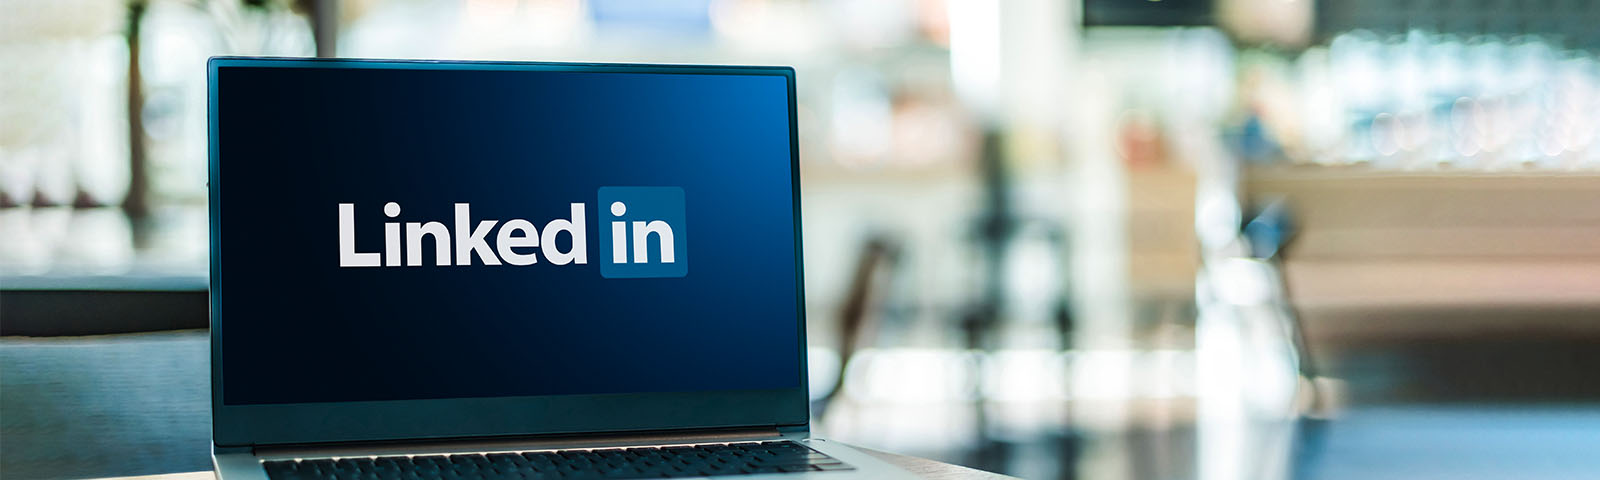 3 Reasons To Use LinkedIn For B2B Lead Generation